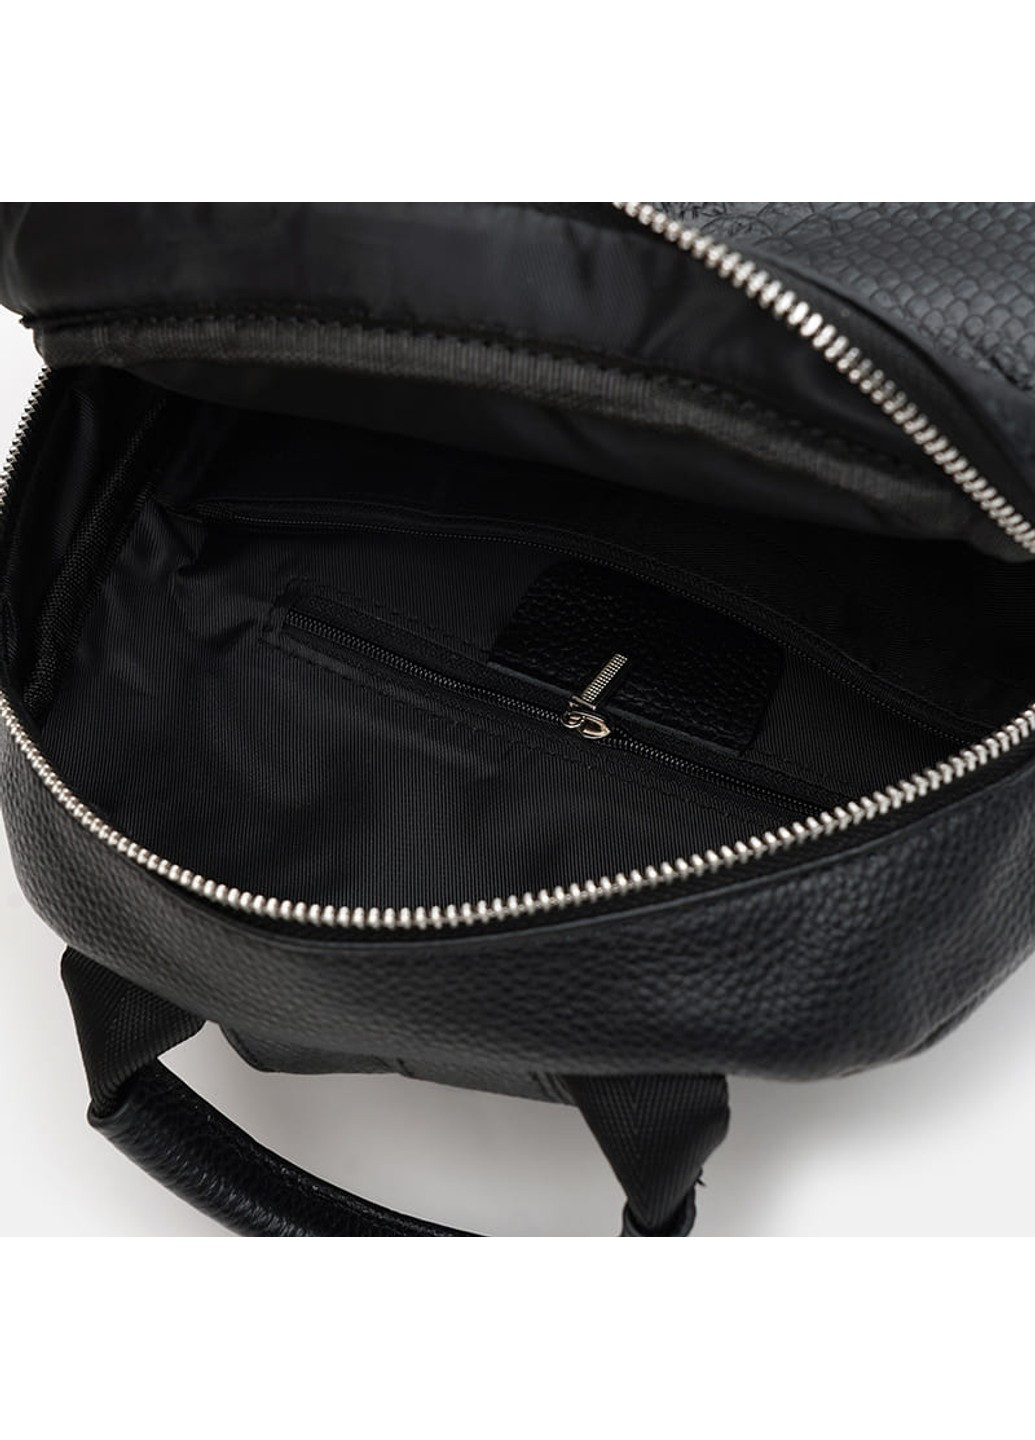 Женский кожаный рюкзак K18663bl-black Keizer (271665106)